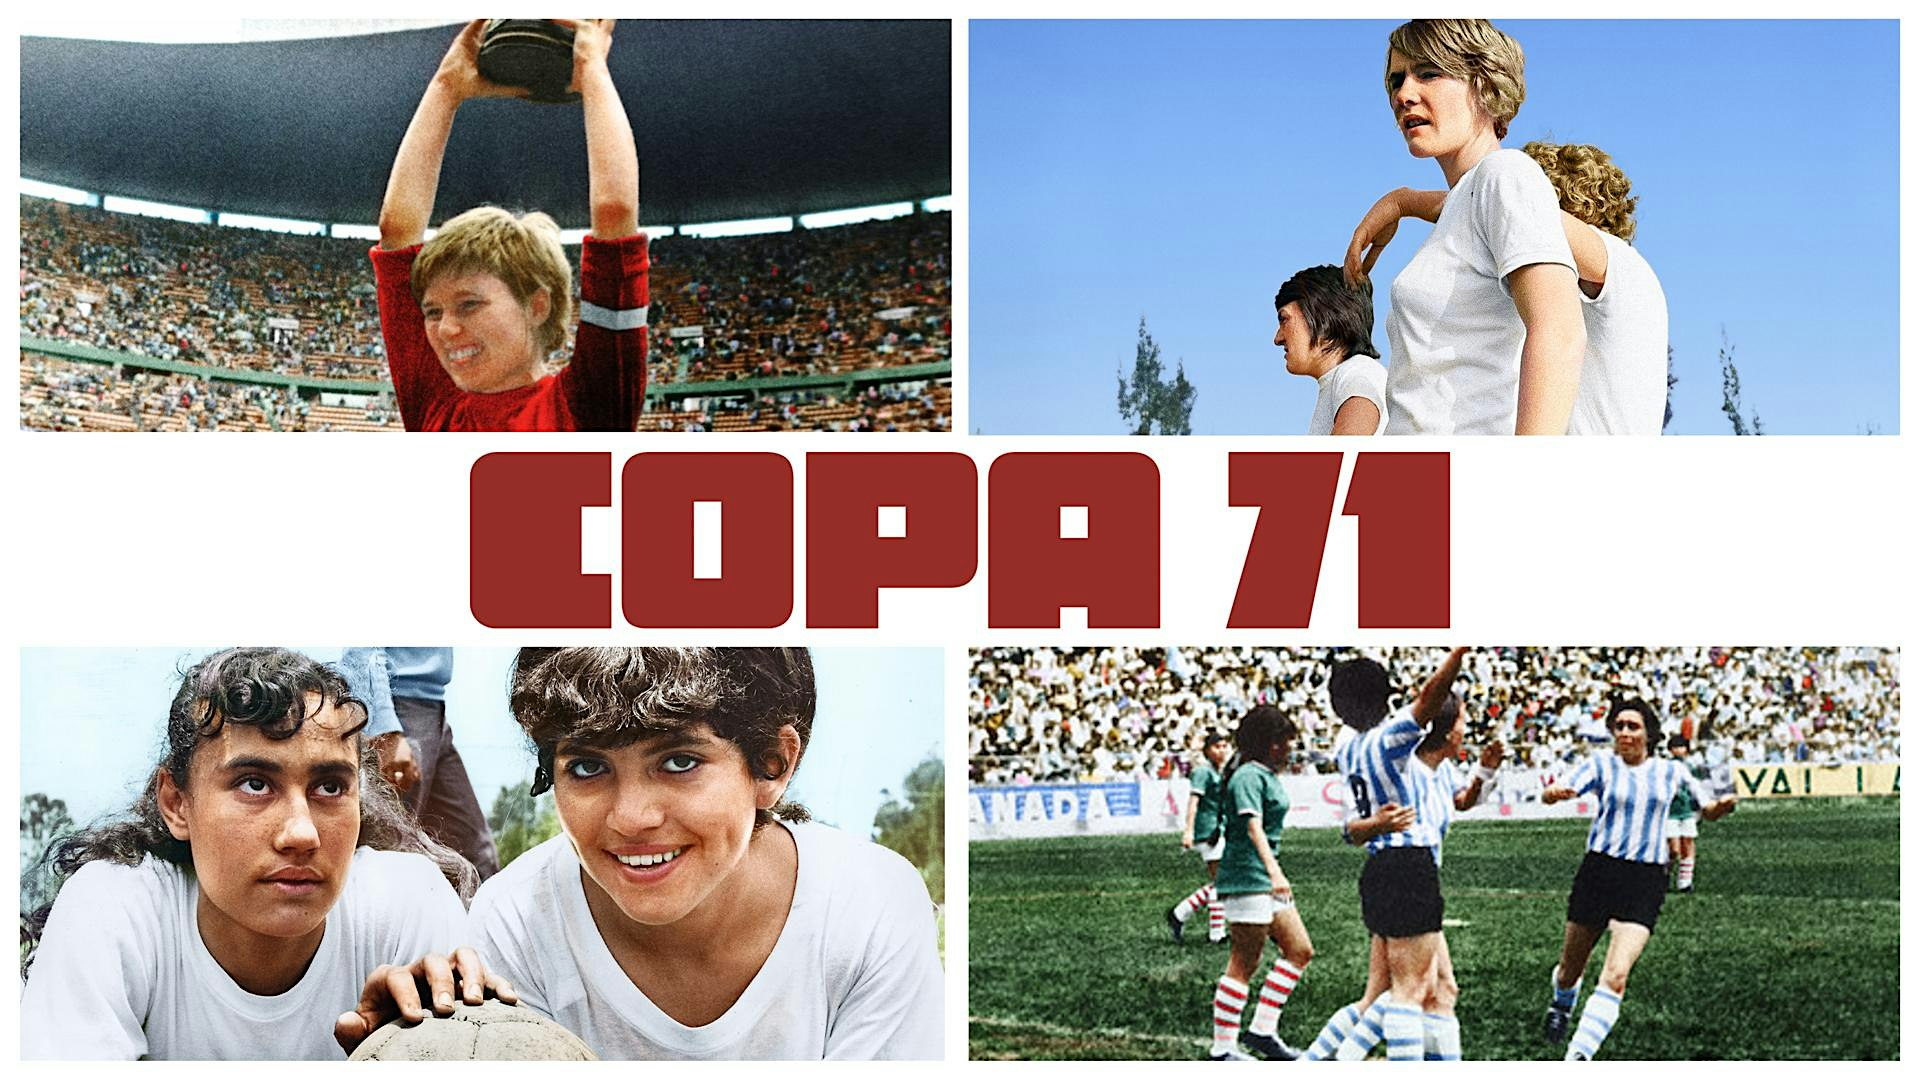 History Film Forum presents: "Copa 71"